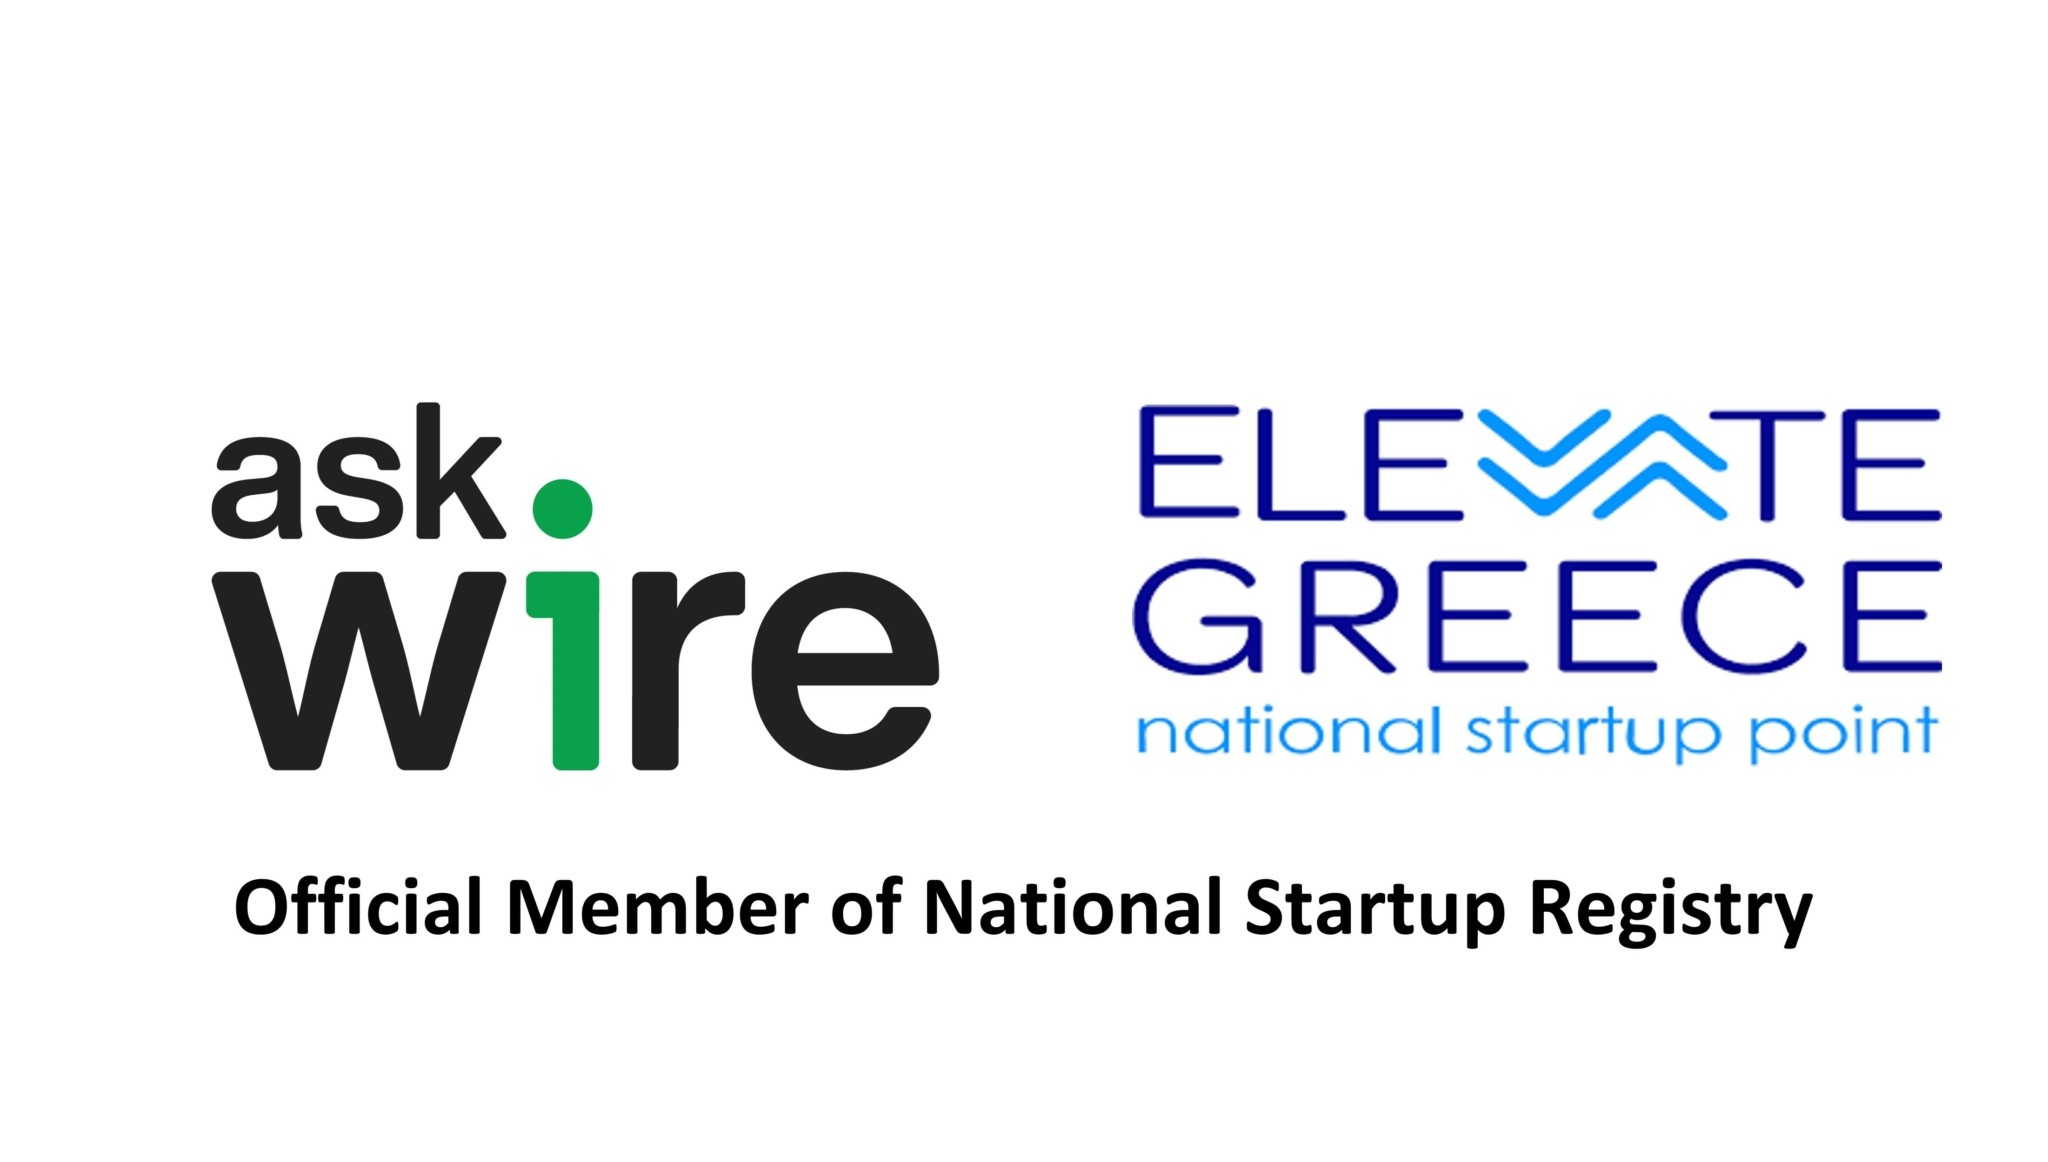 Ask Wire: Μέλος του Elevate Greece – Ενισχύει την πληροφόρηση για την ελληνική αγορά ακινήτων